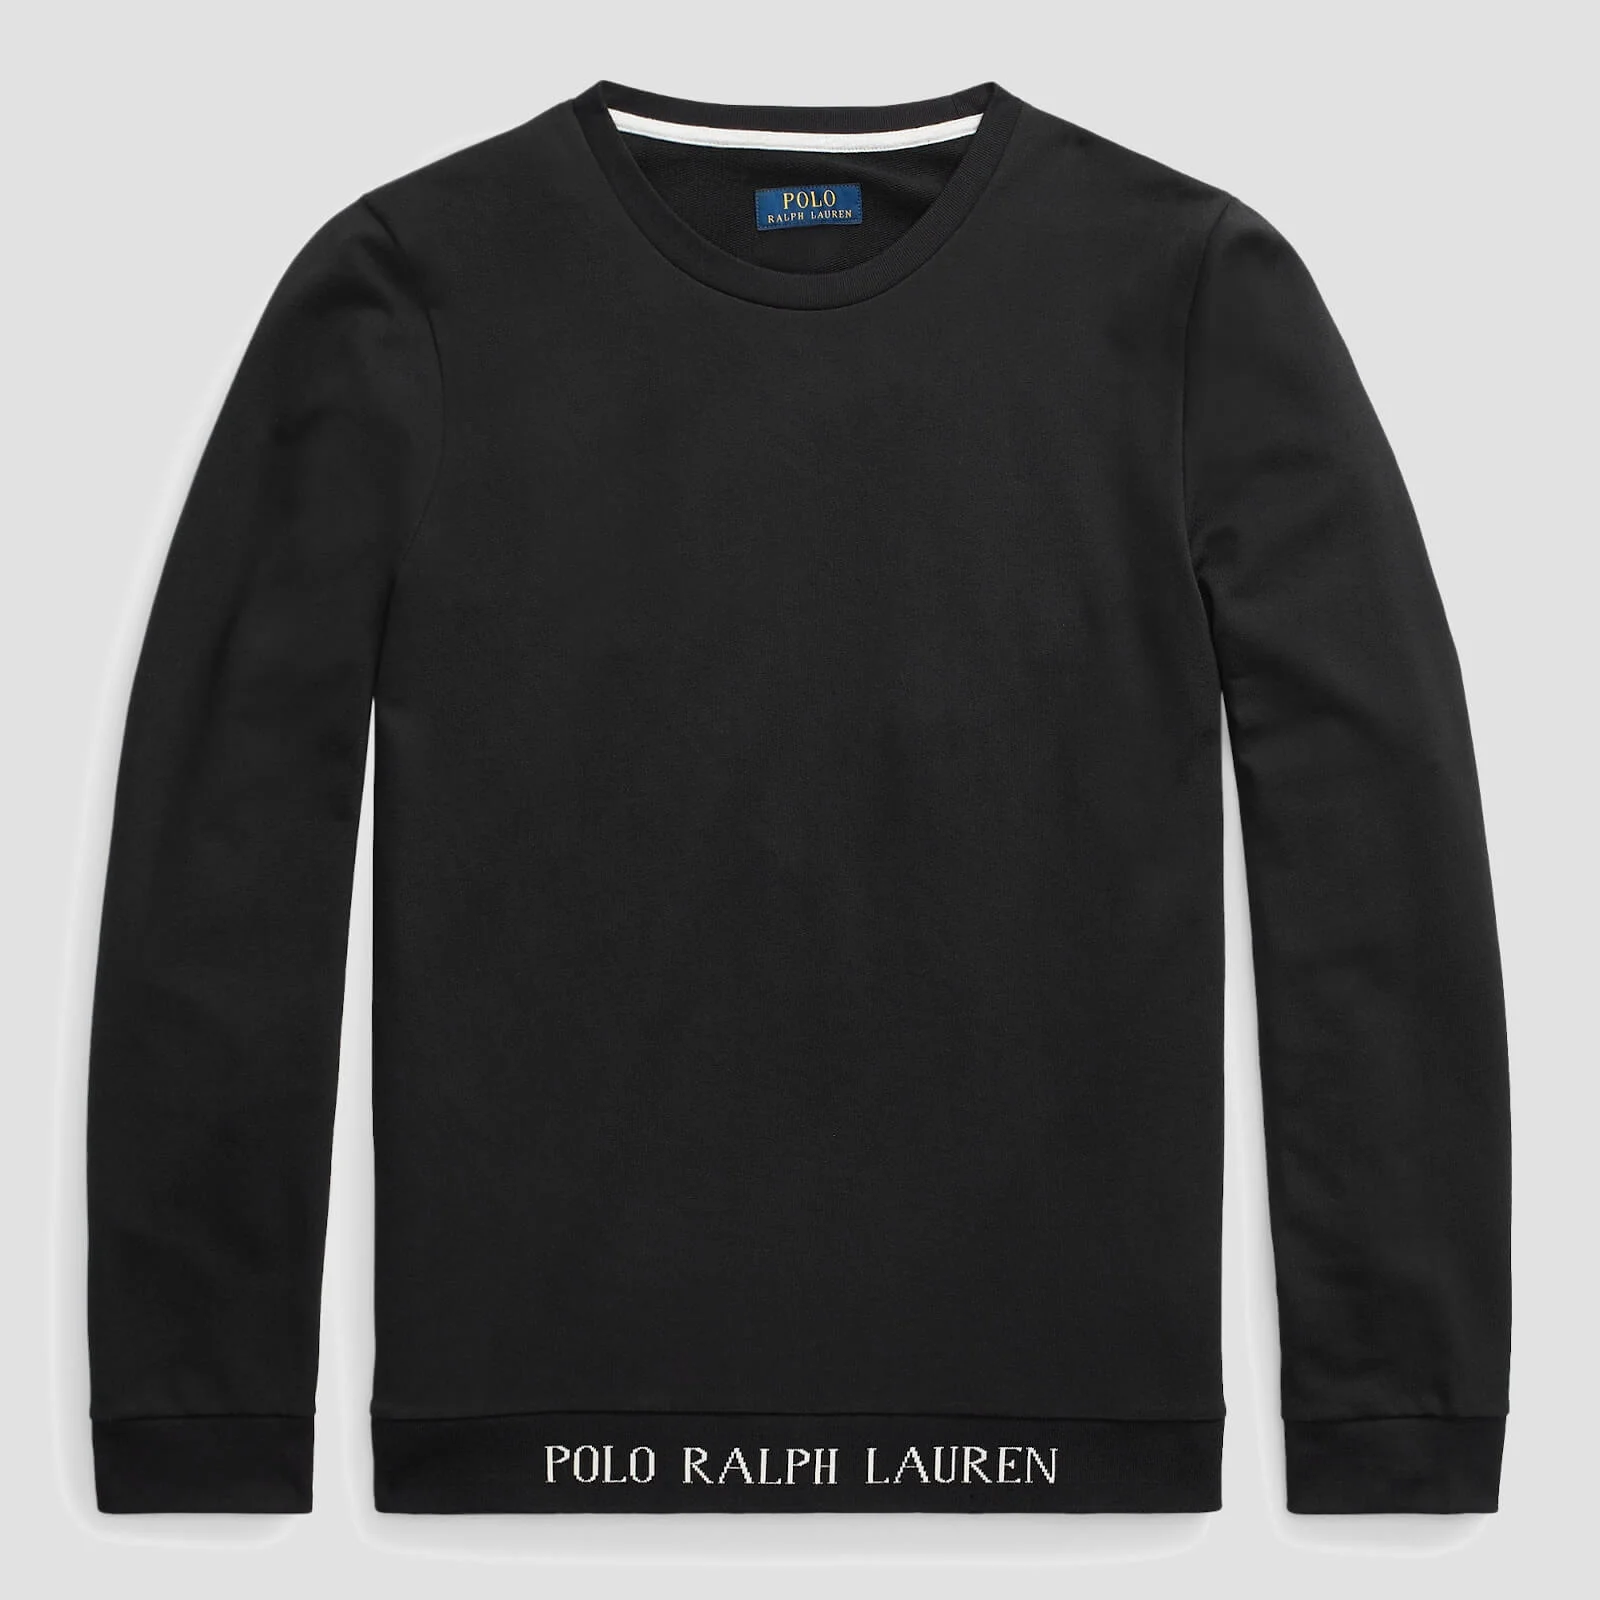 Polo Ralph Lauren Men's Long Sleeve Crewneck Sleep Top - Polo Black Image 1